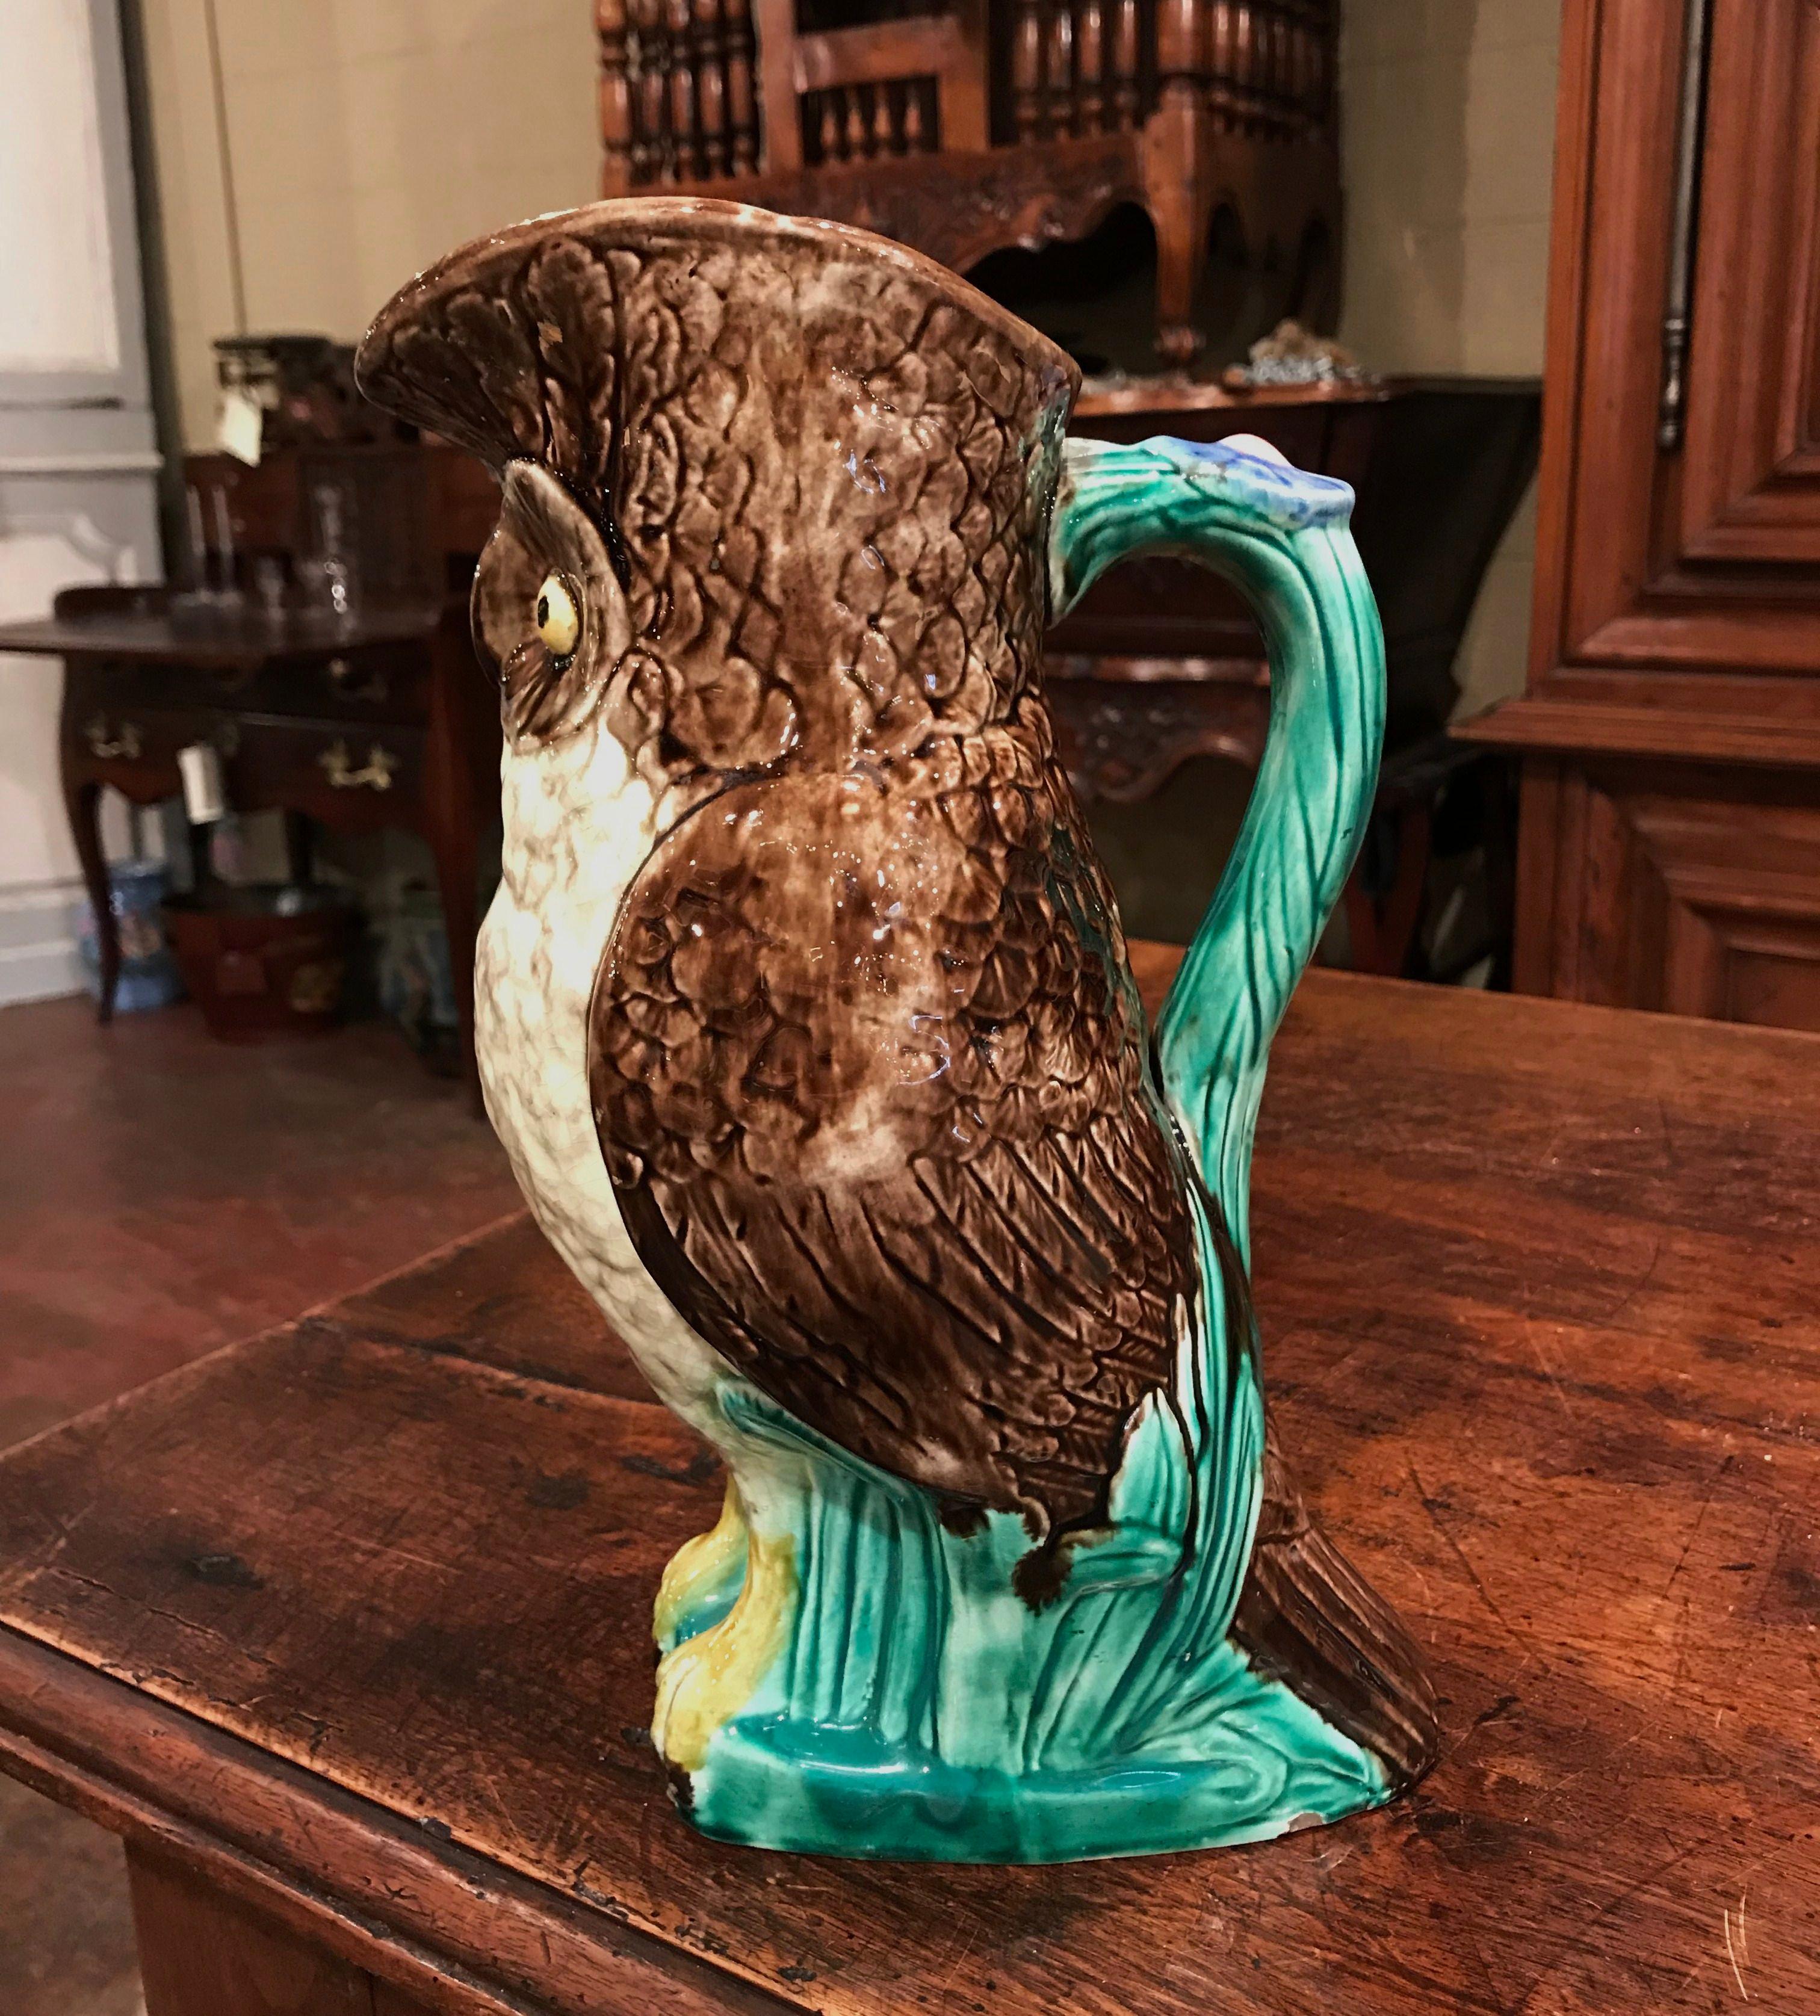 Belgian 19th Century Belgium Painted Ceramic Barbotine Owl Pitcher from Nimy-Les-Mons